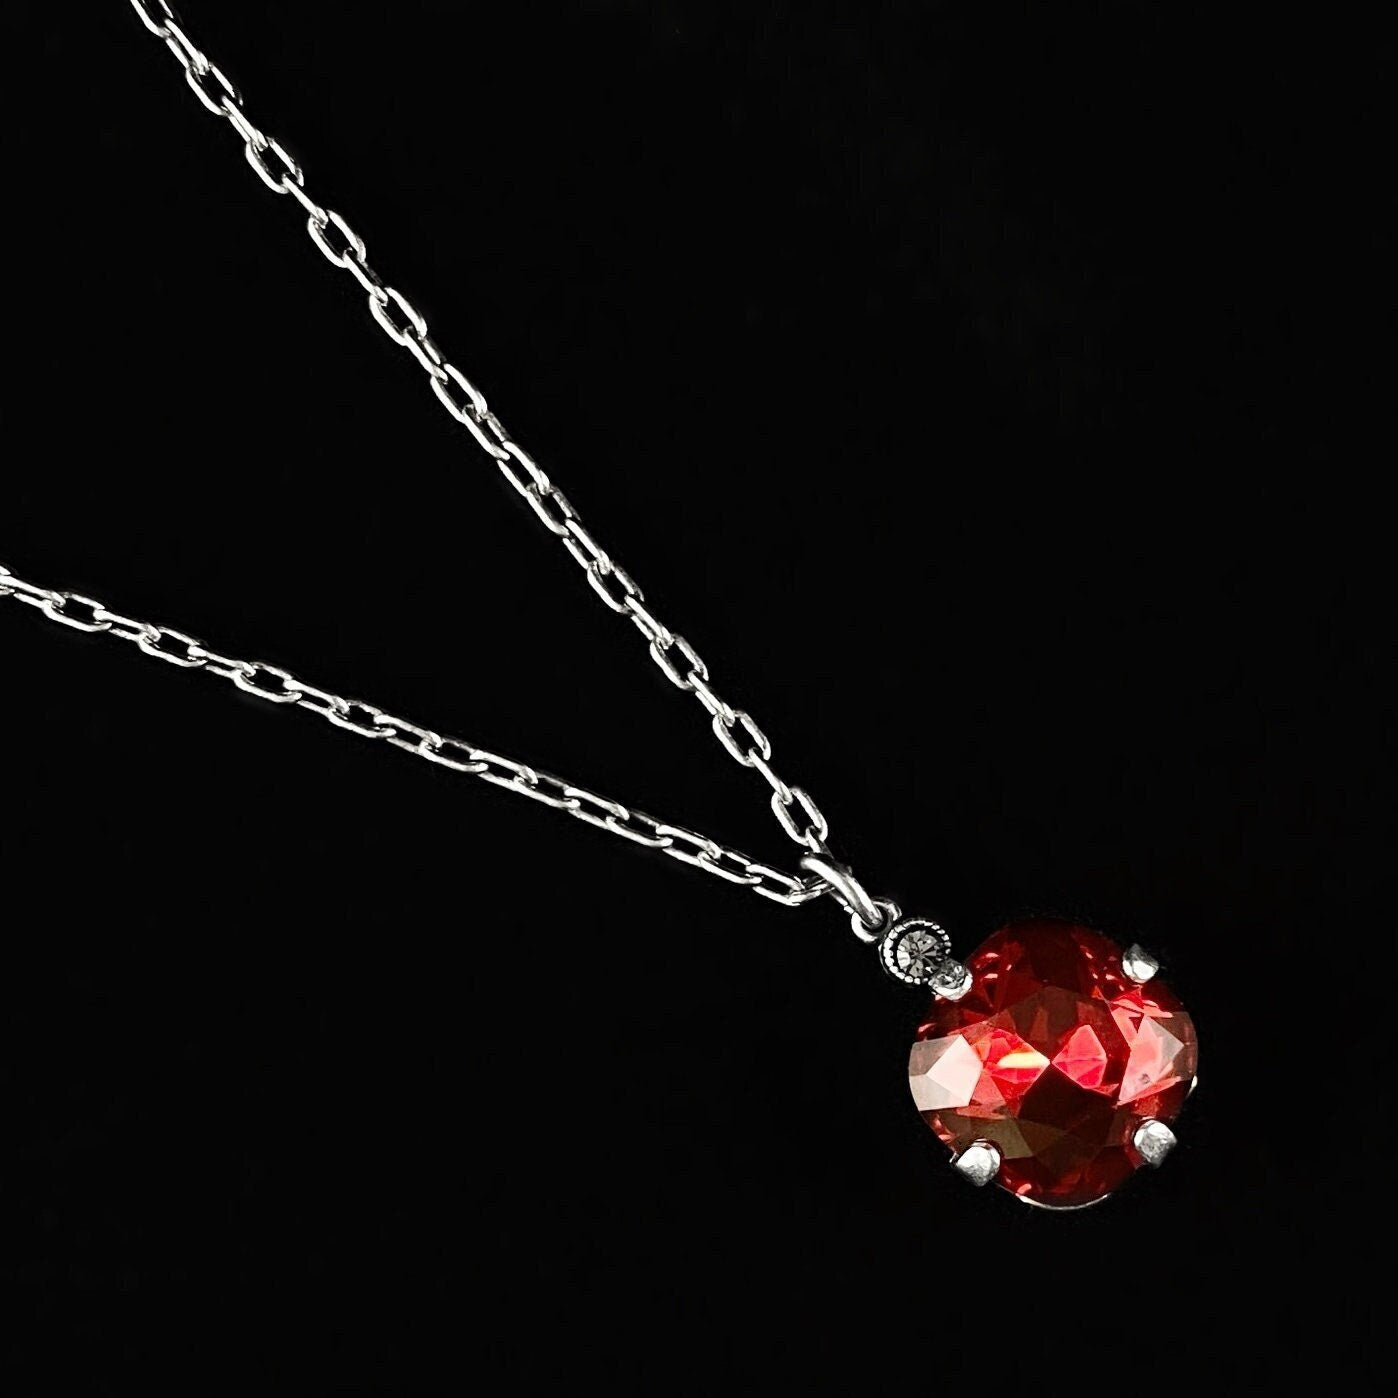 Scarlet Red Cushion Cut Swarovski Crystal Pendant Necklace - La Vie Parisienne by Catherine Popesco